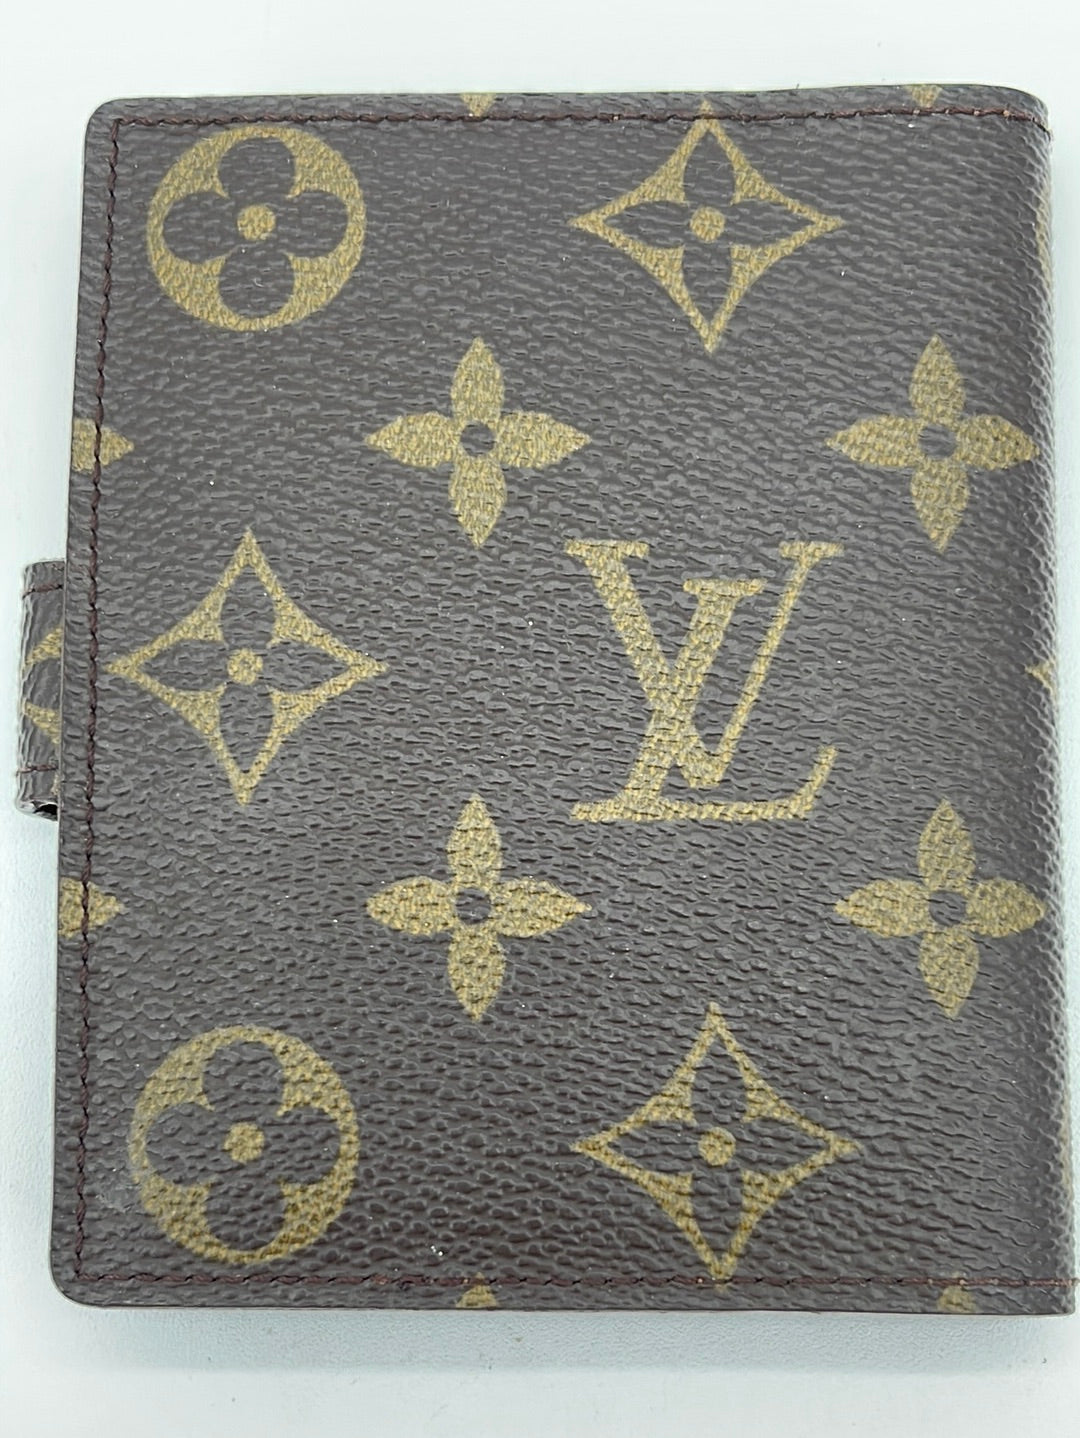 Louis-Vuitton-Monogram-Agenda-GM-Planner-Cover-Brown-R20106 – dct